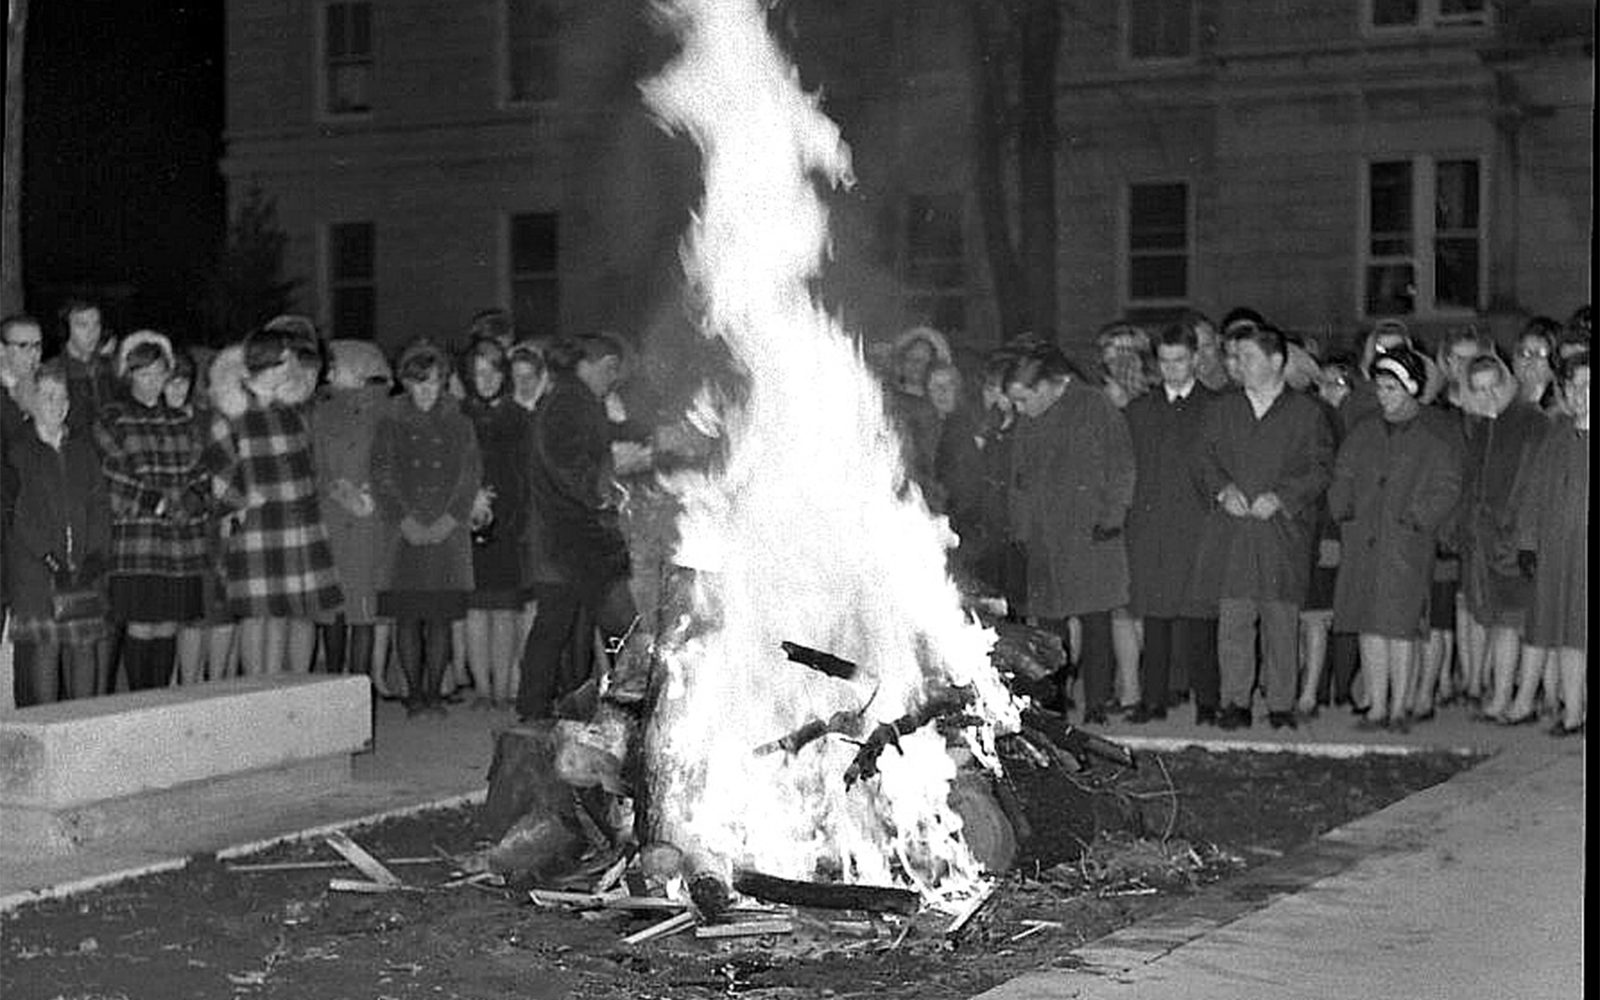 Olivet_Christams_holiday_traditions_campus_nostalgia_University_archives_bonfire_web10.jpg